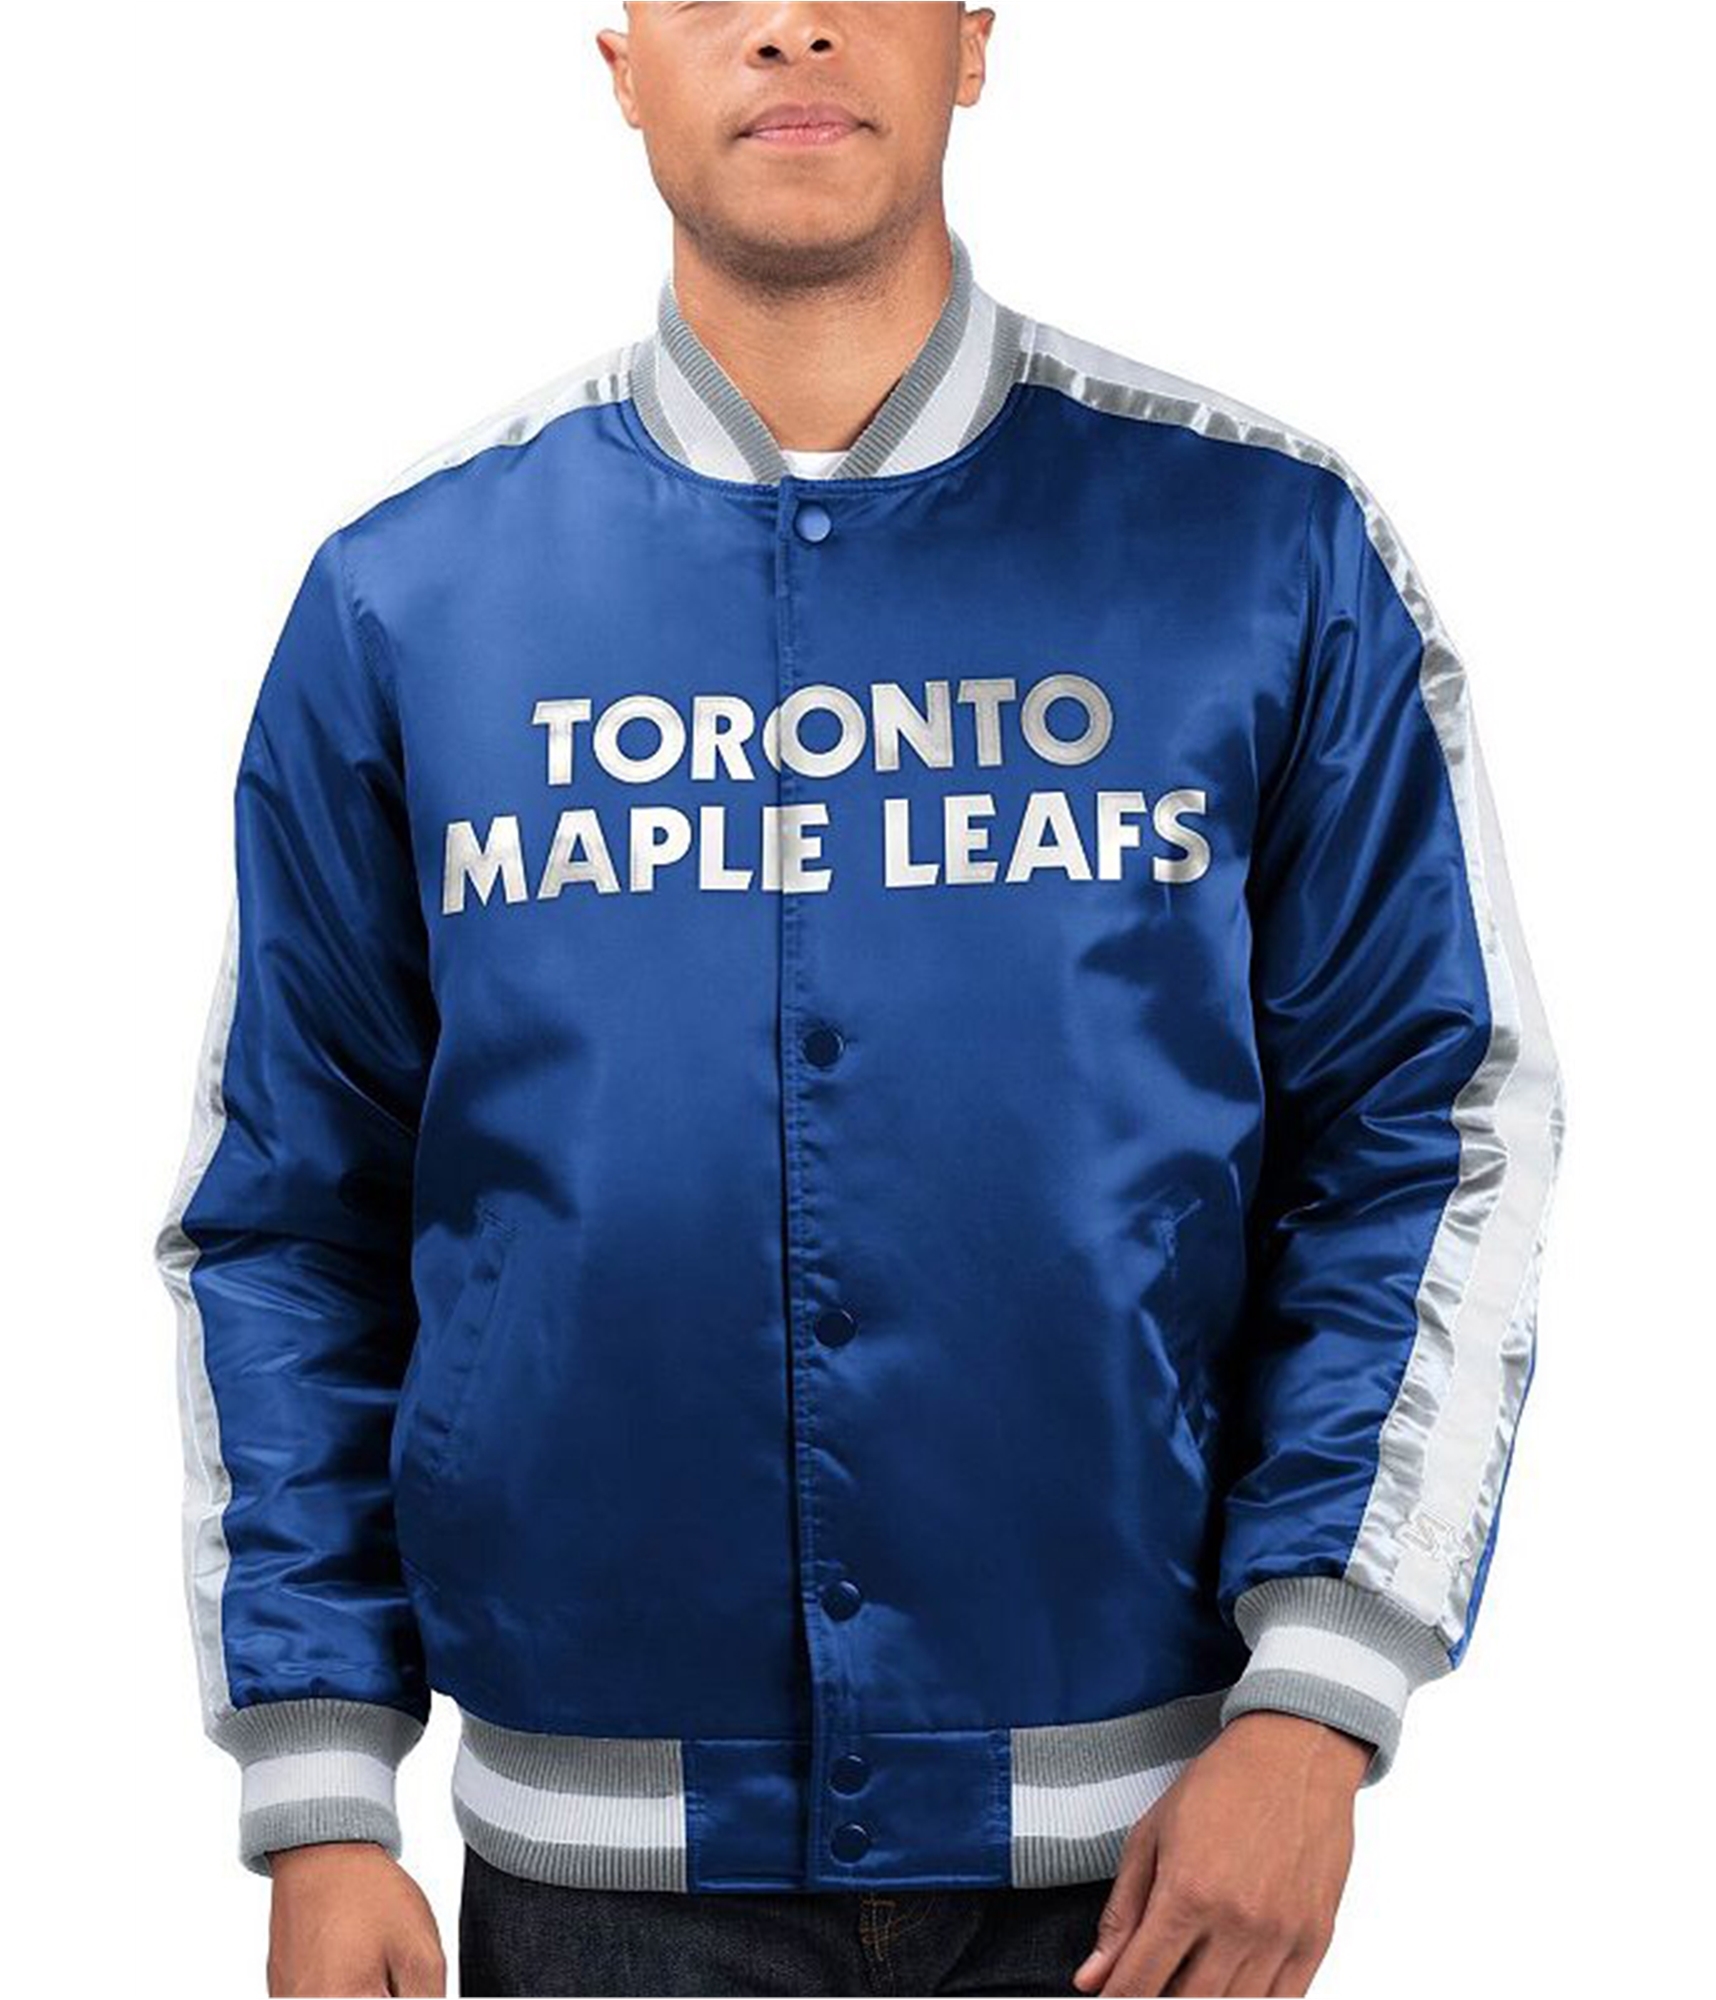 Toronto Maple Leafs Starter Jacket